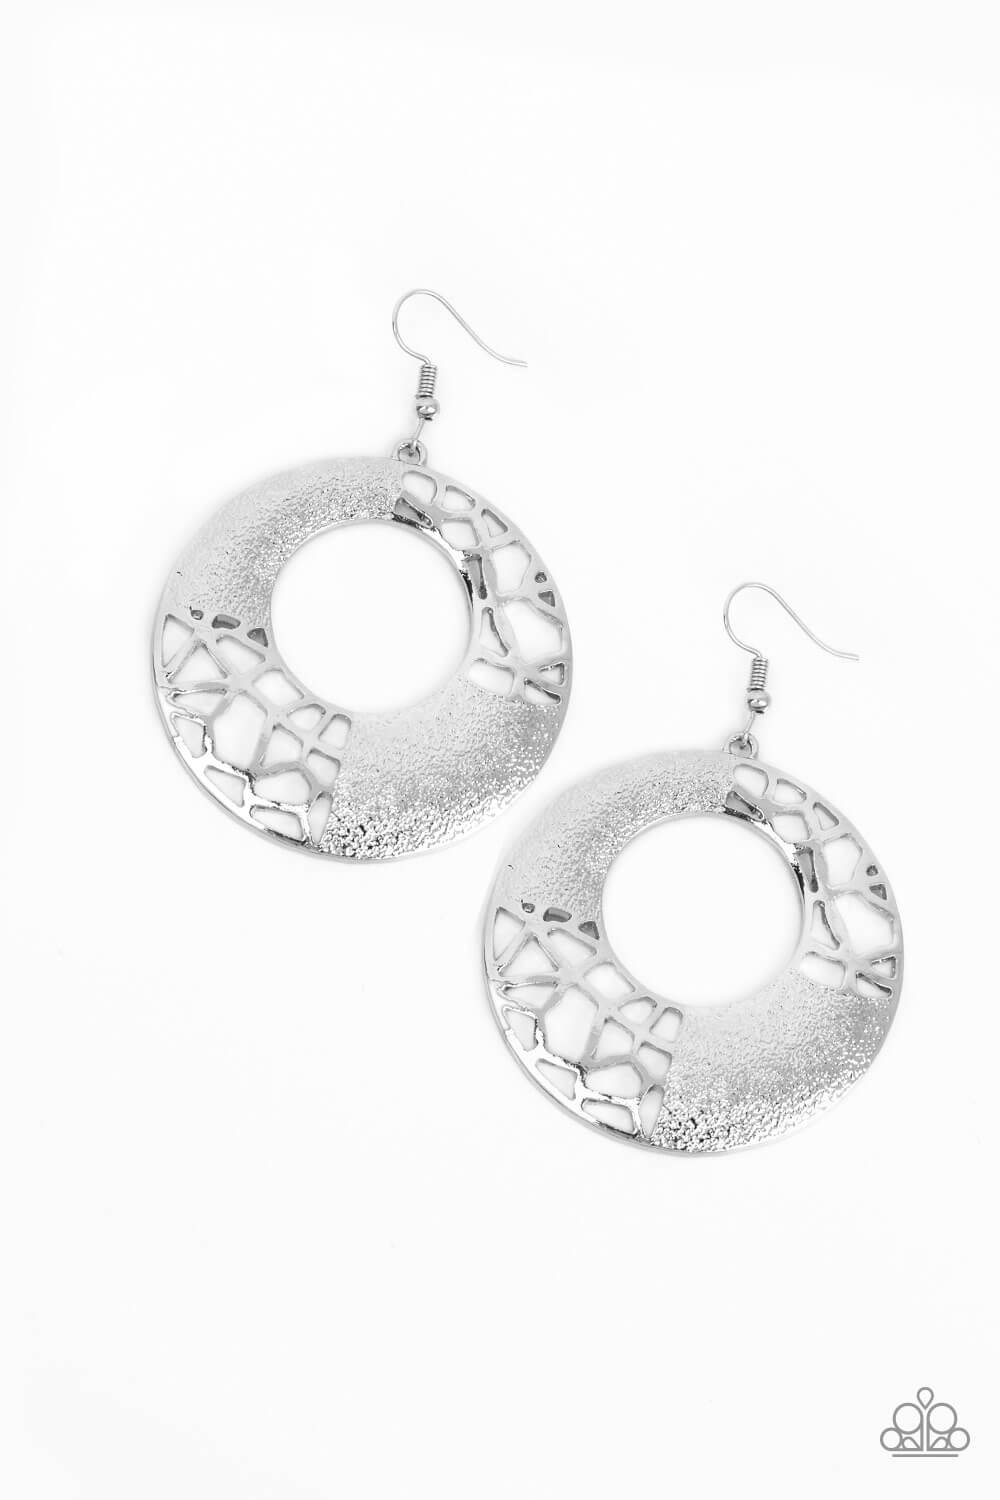 Shattered Shimmer - Silver Hoop Earrings - Princess Glam Shop